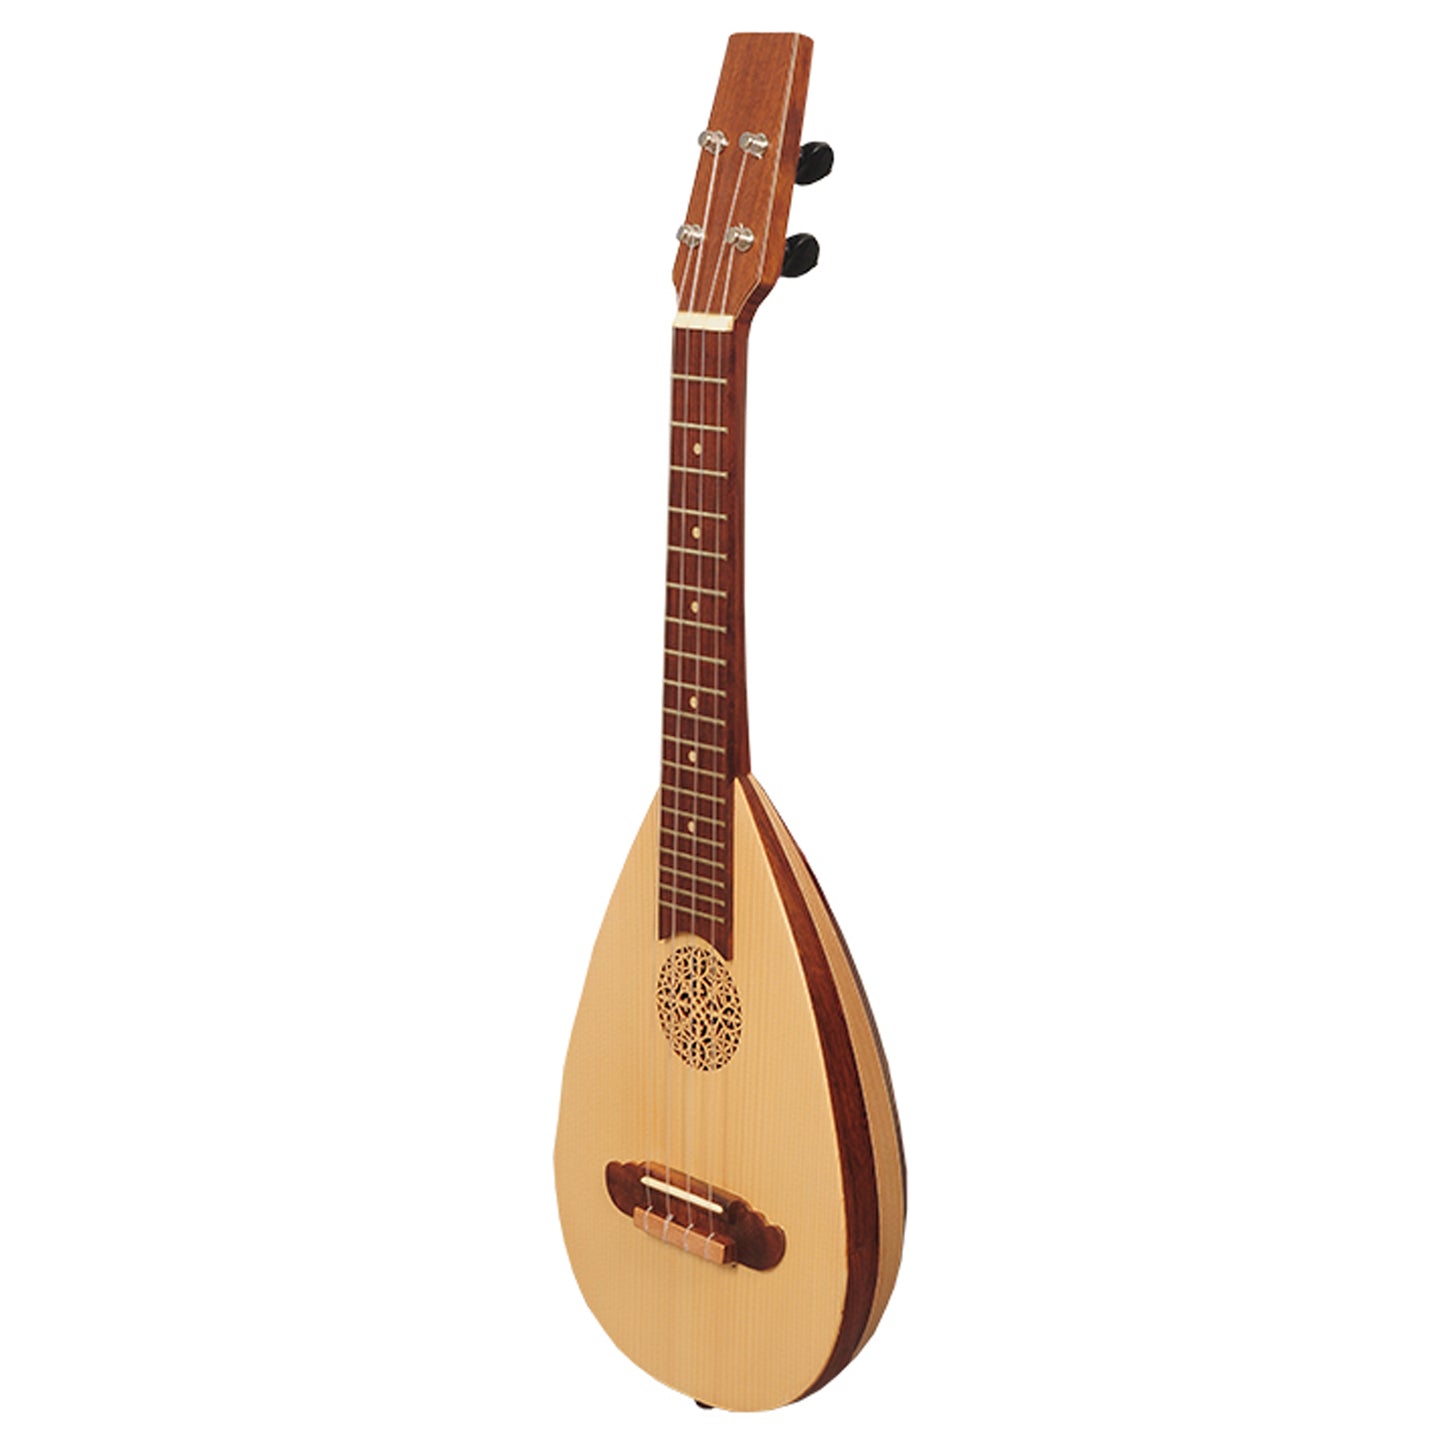 Heartland Baroque Ukulele, 4 String Baritone Variegated Rosewood And Lacewood